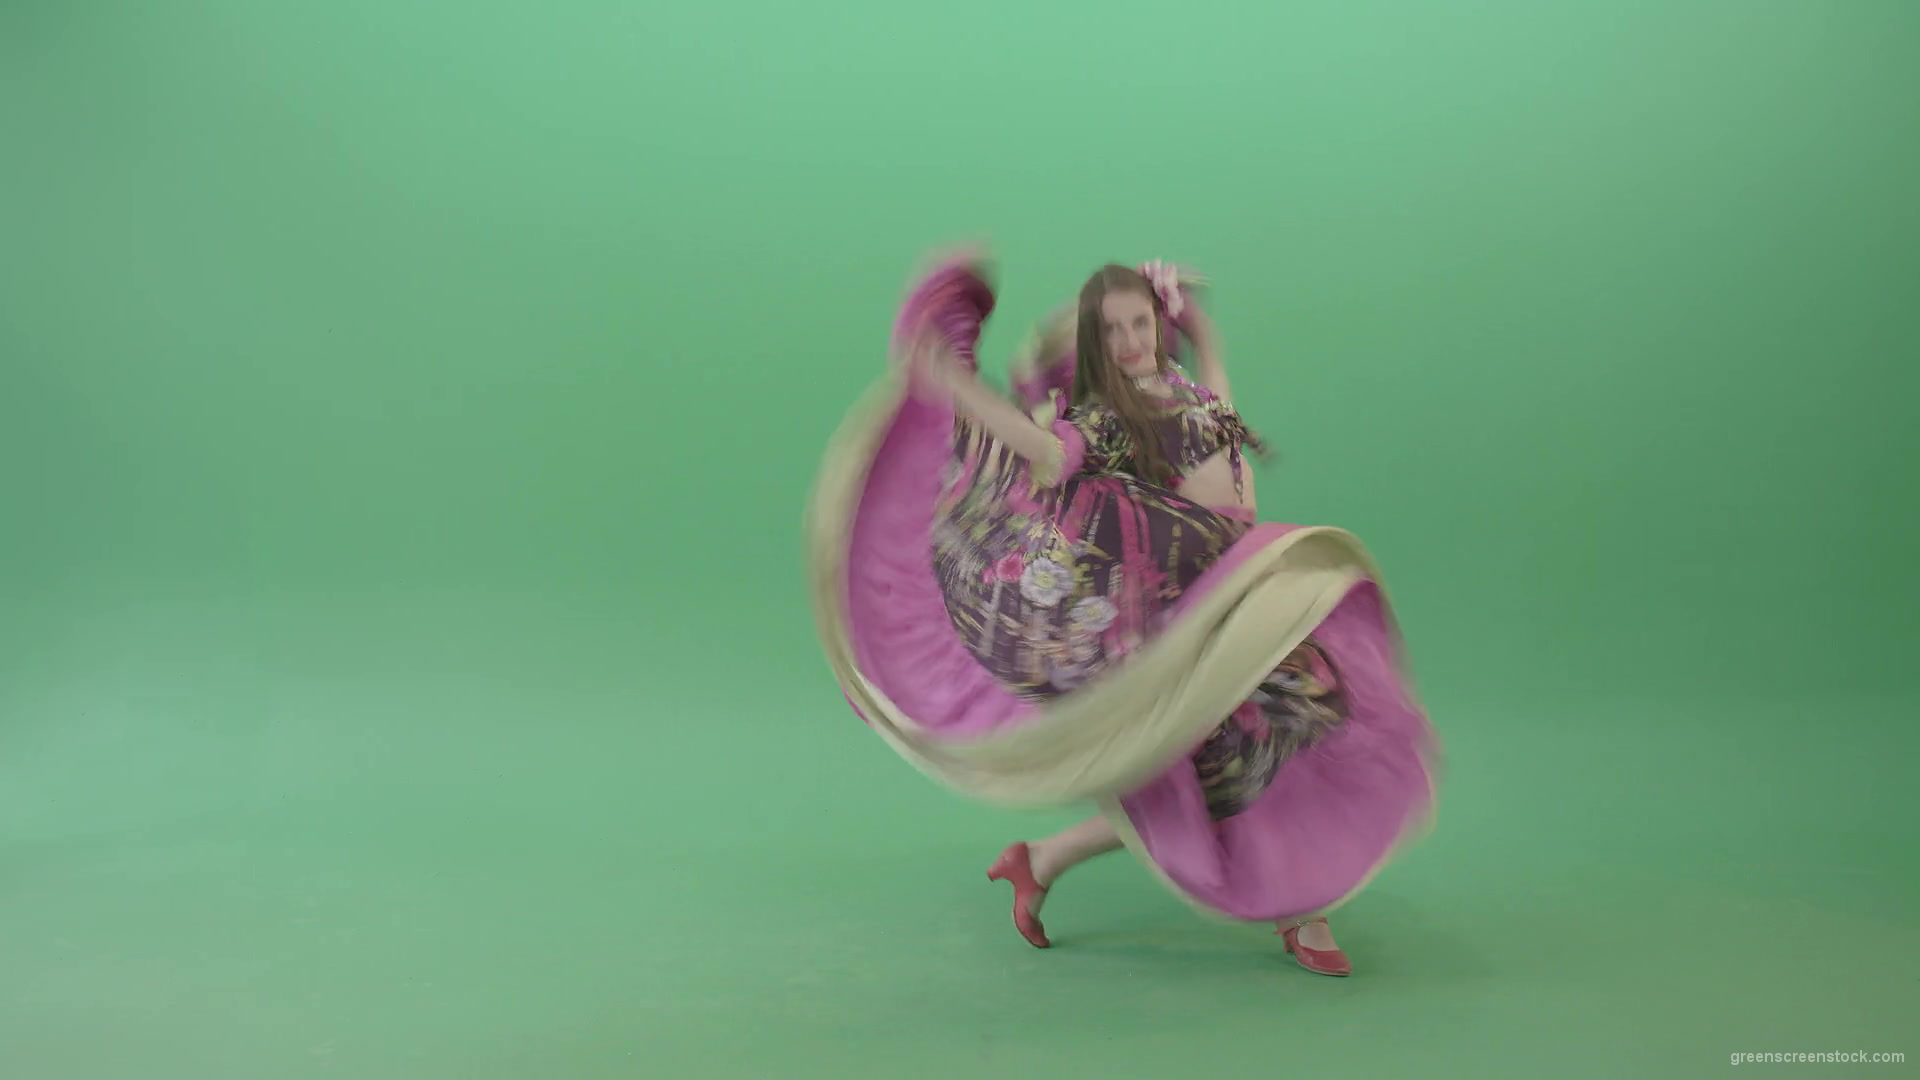 Tzigane-romana-gypsy-girl-waving-pink-dress-dancing-isolated-in-green-screen-studio-4K-Green-Screen-Video-Footage-1920_005 Green Screen Stock